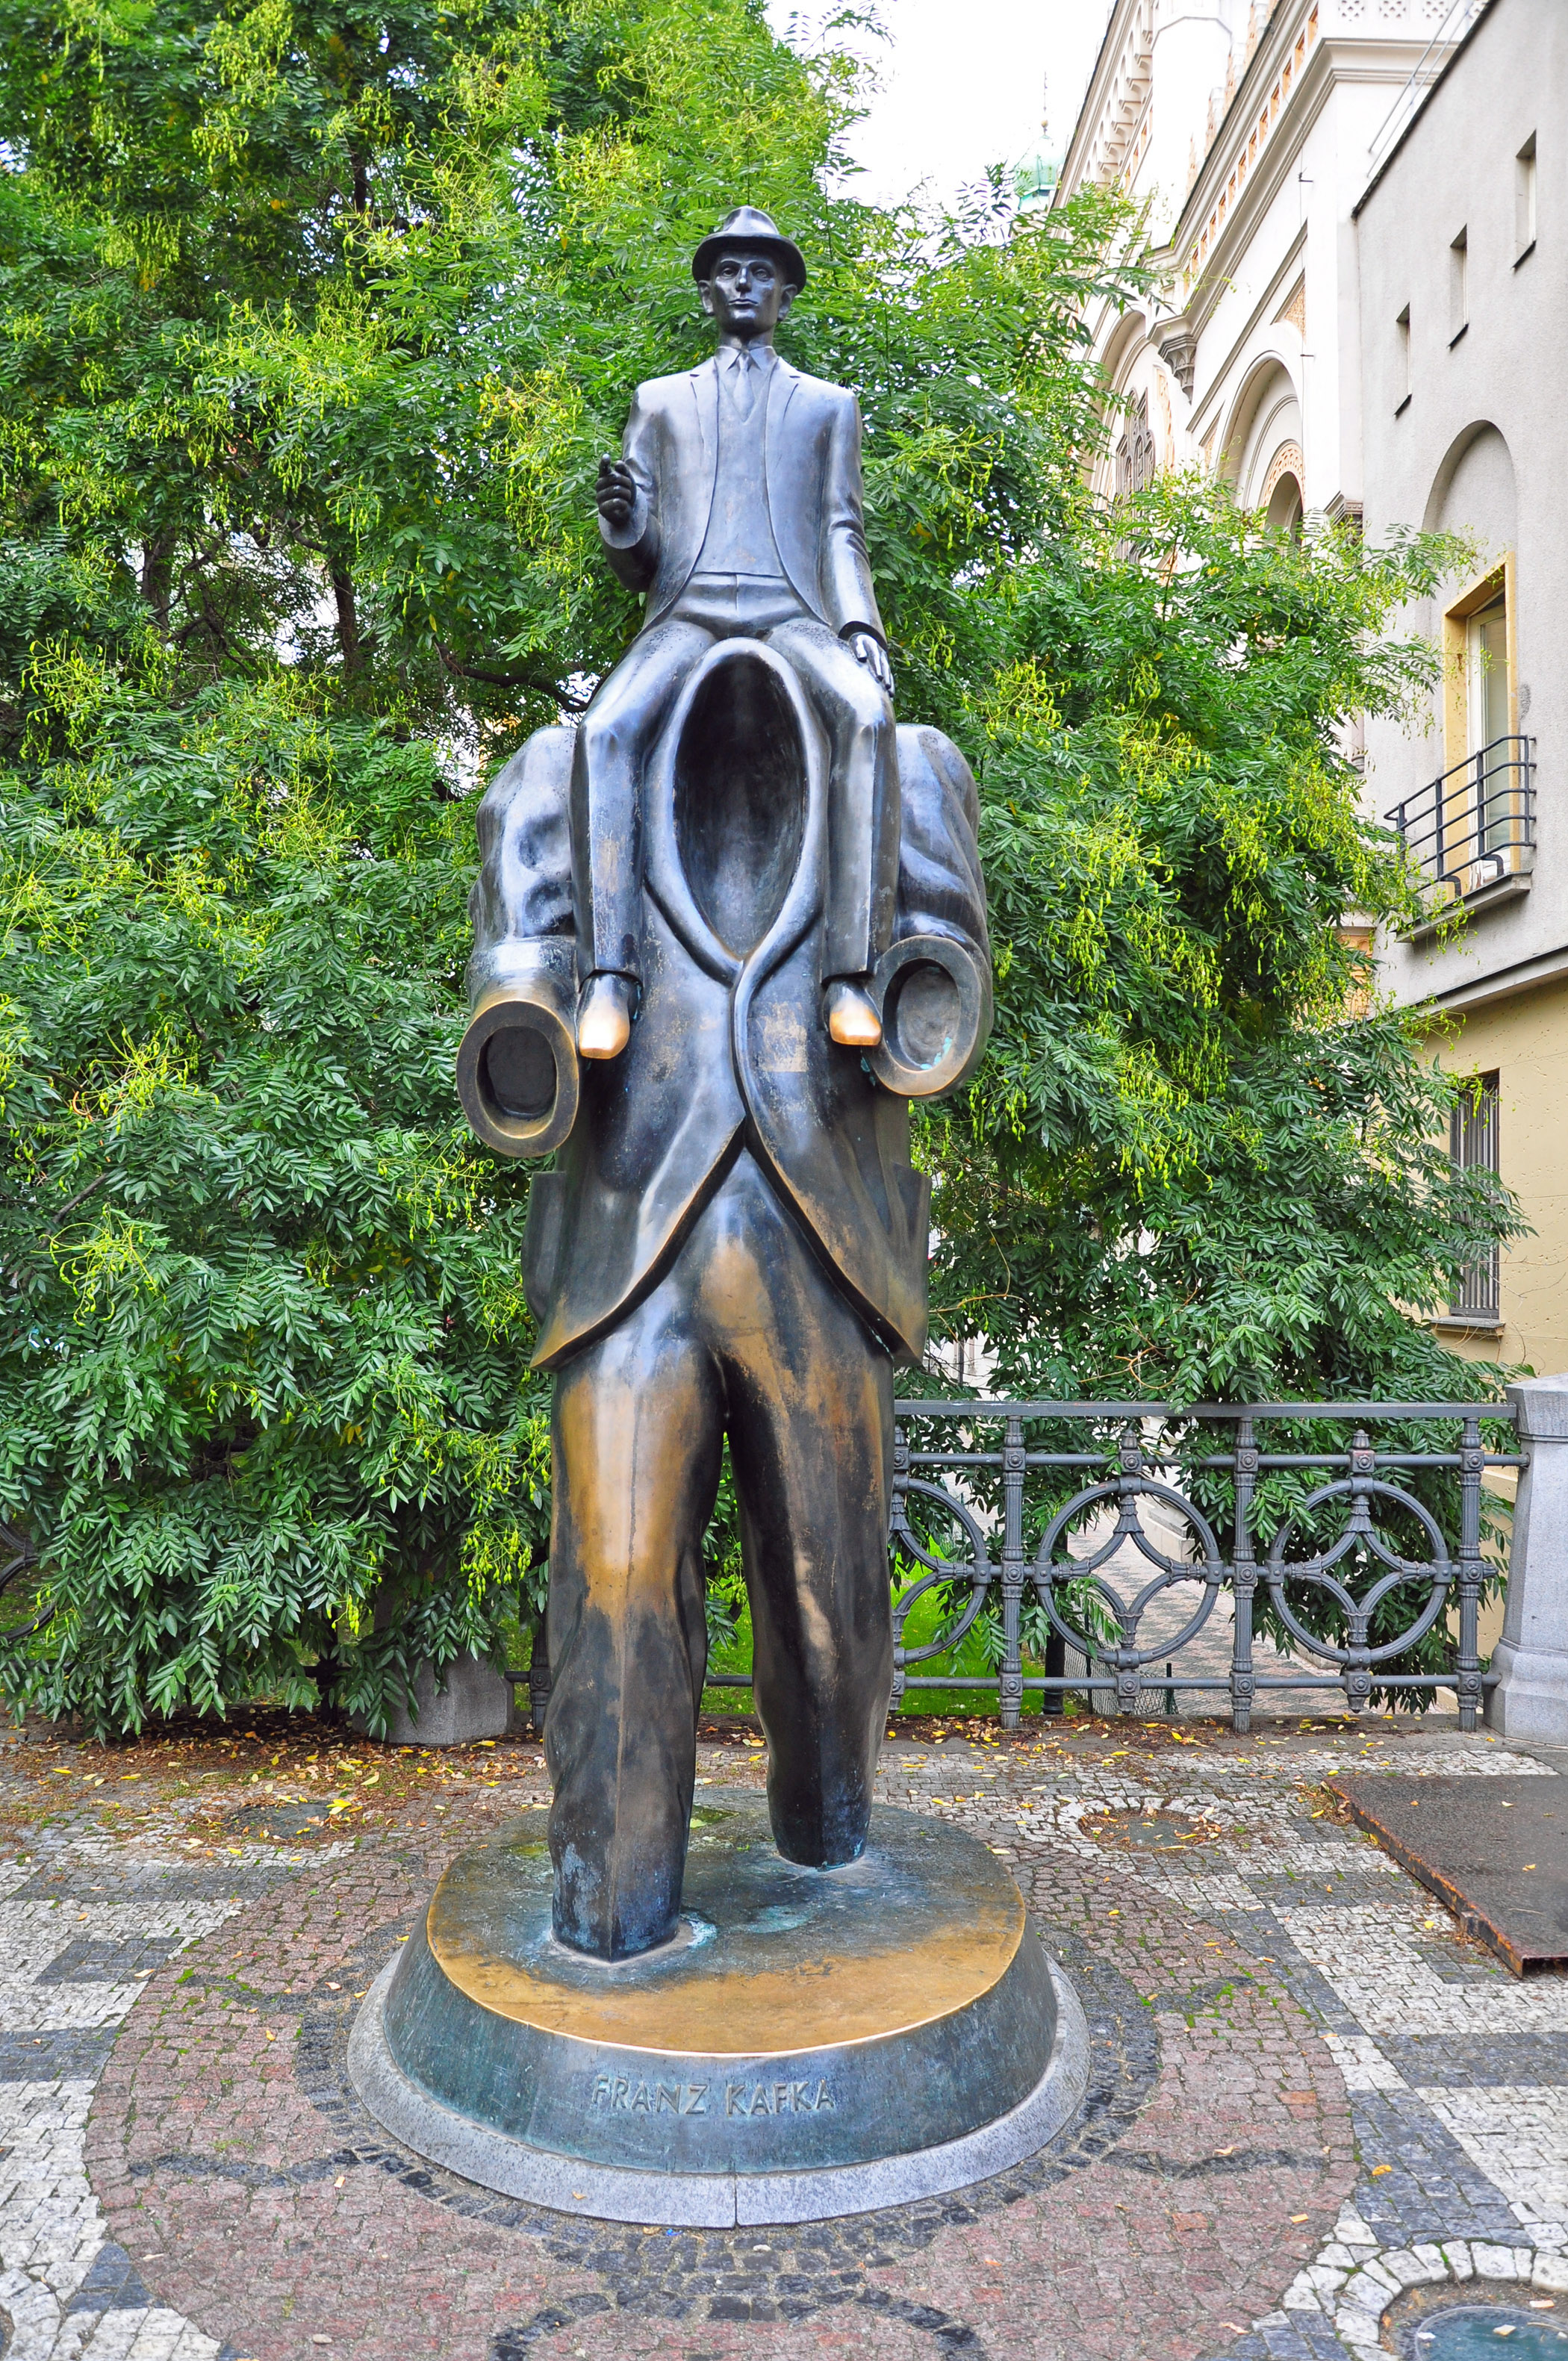 4. Kafka monument